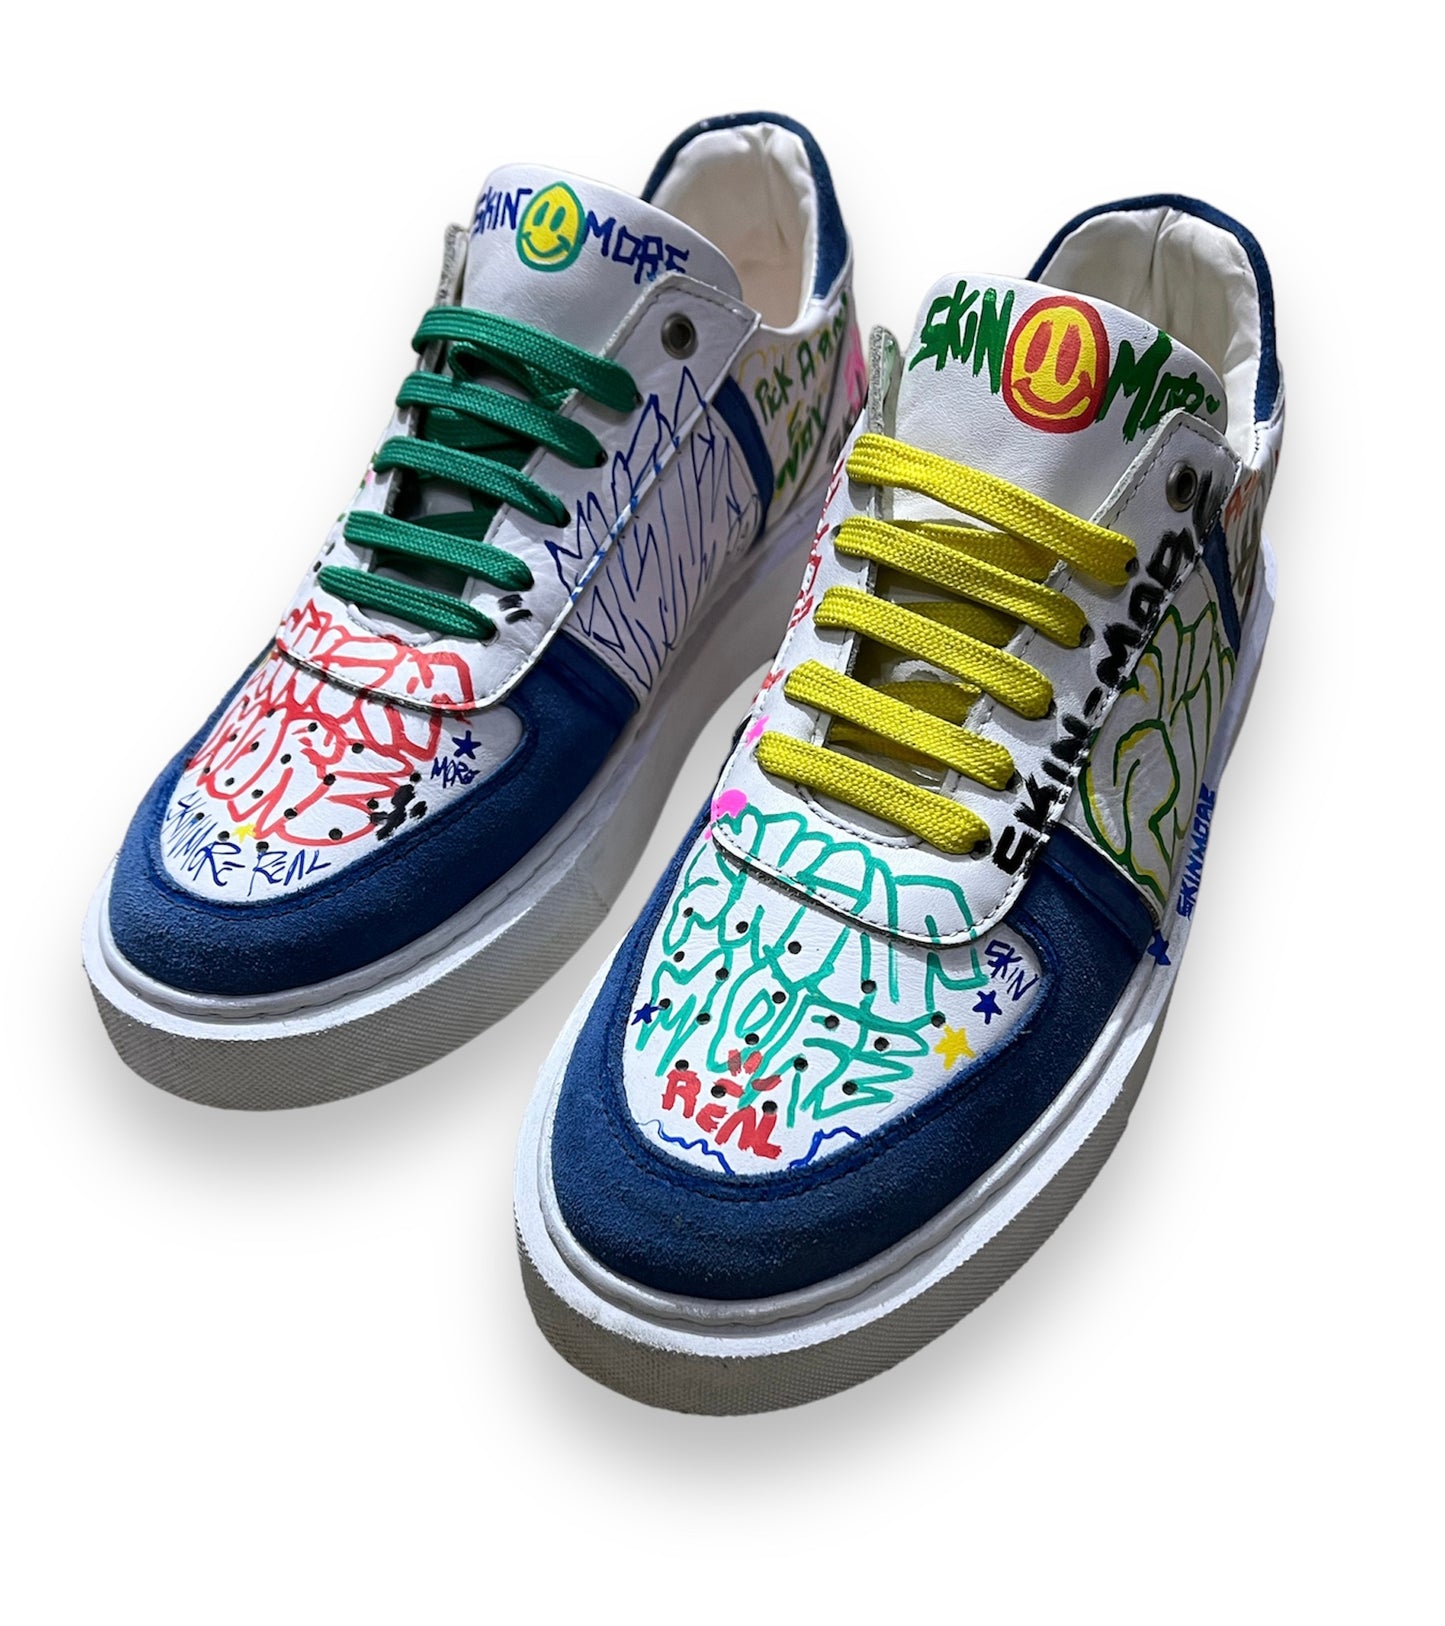 graffiti shoes logo